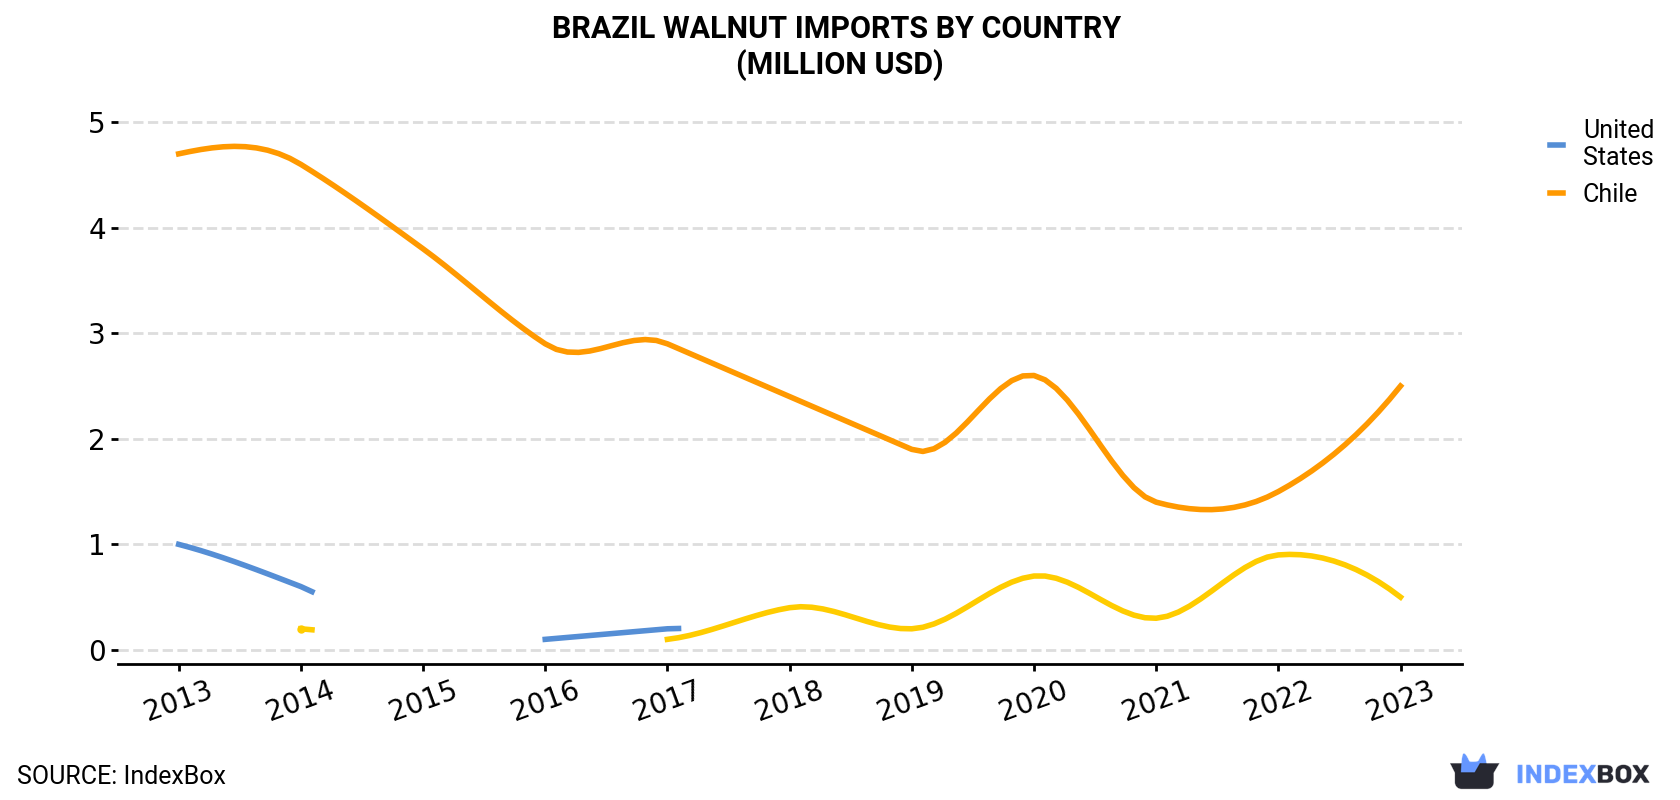 Brazil Walnut Imports By Country (Million USD)